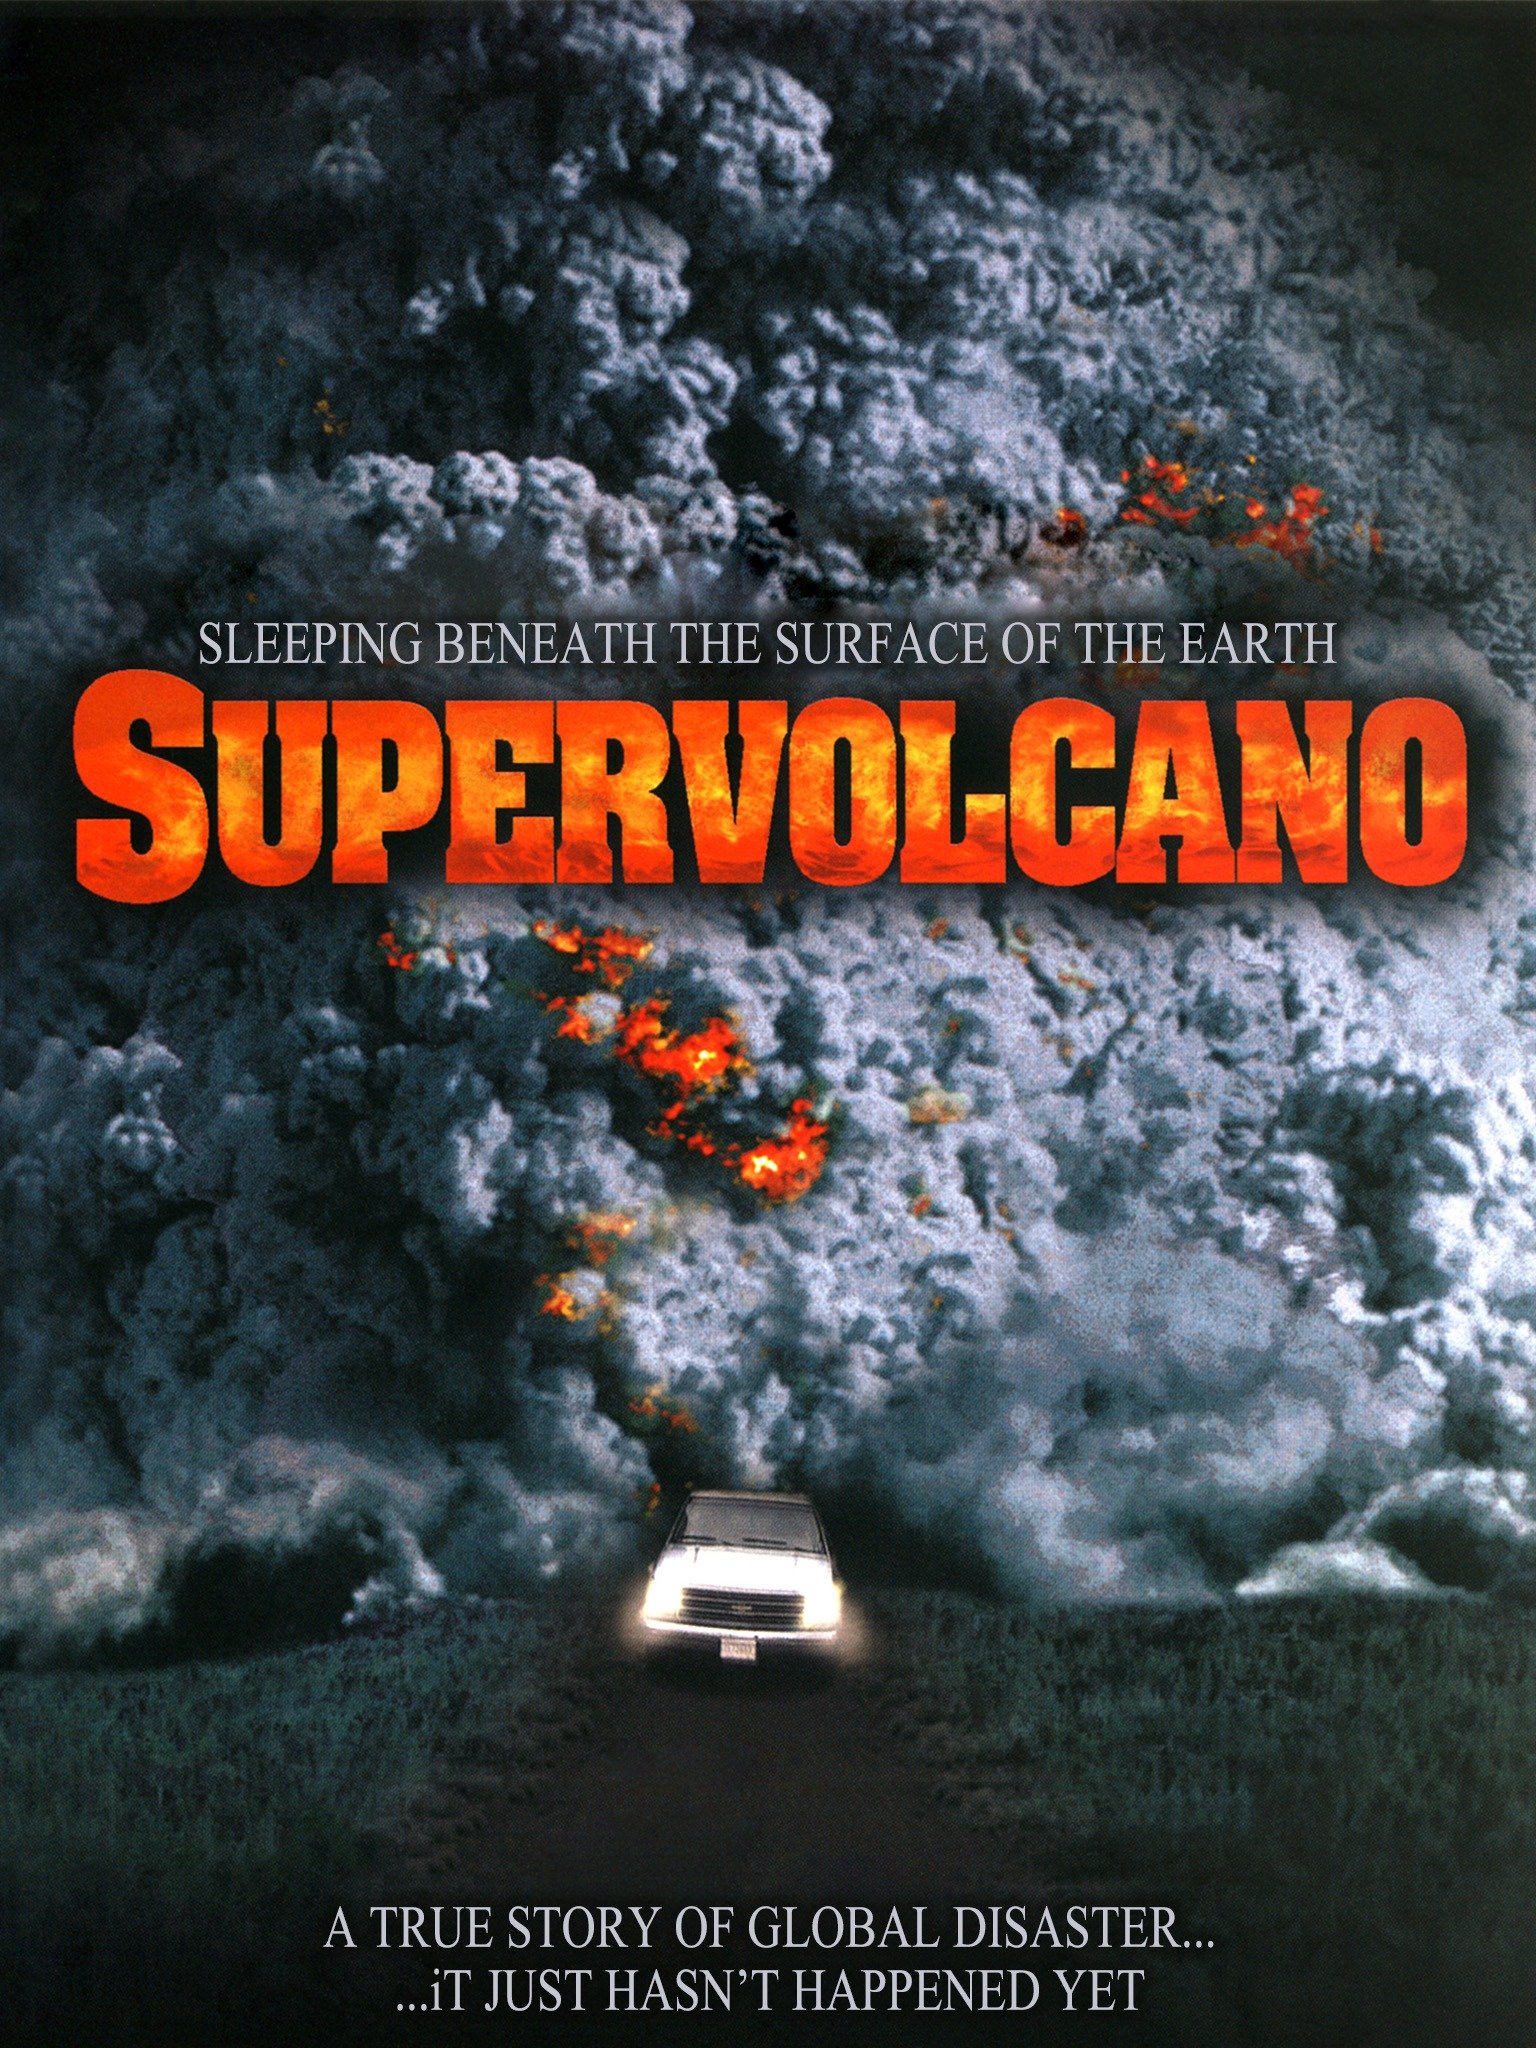 super volcano movie review